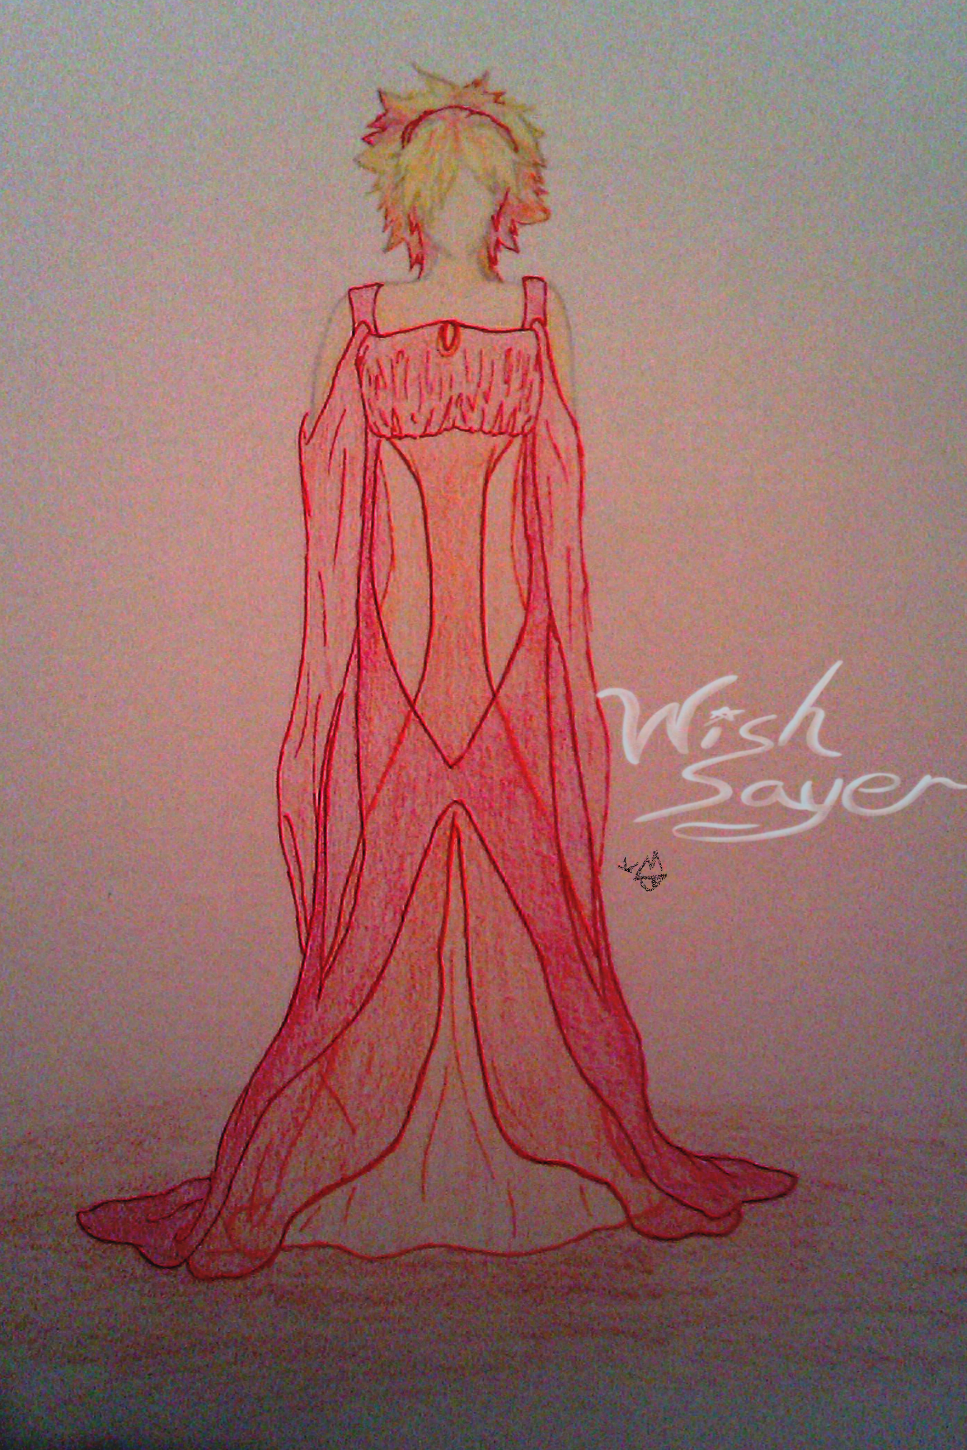 red dress(pencil) by Wishsayer